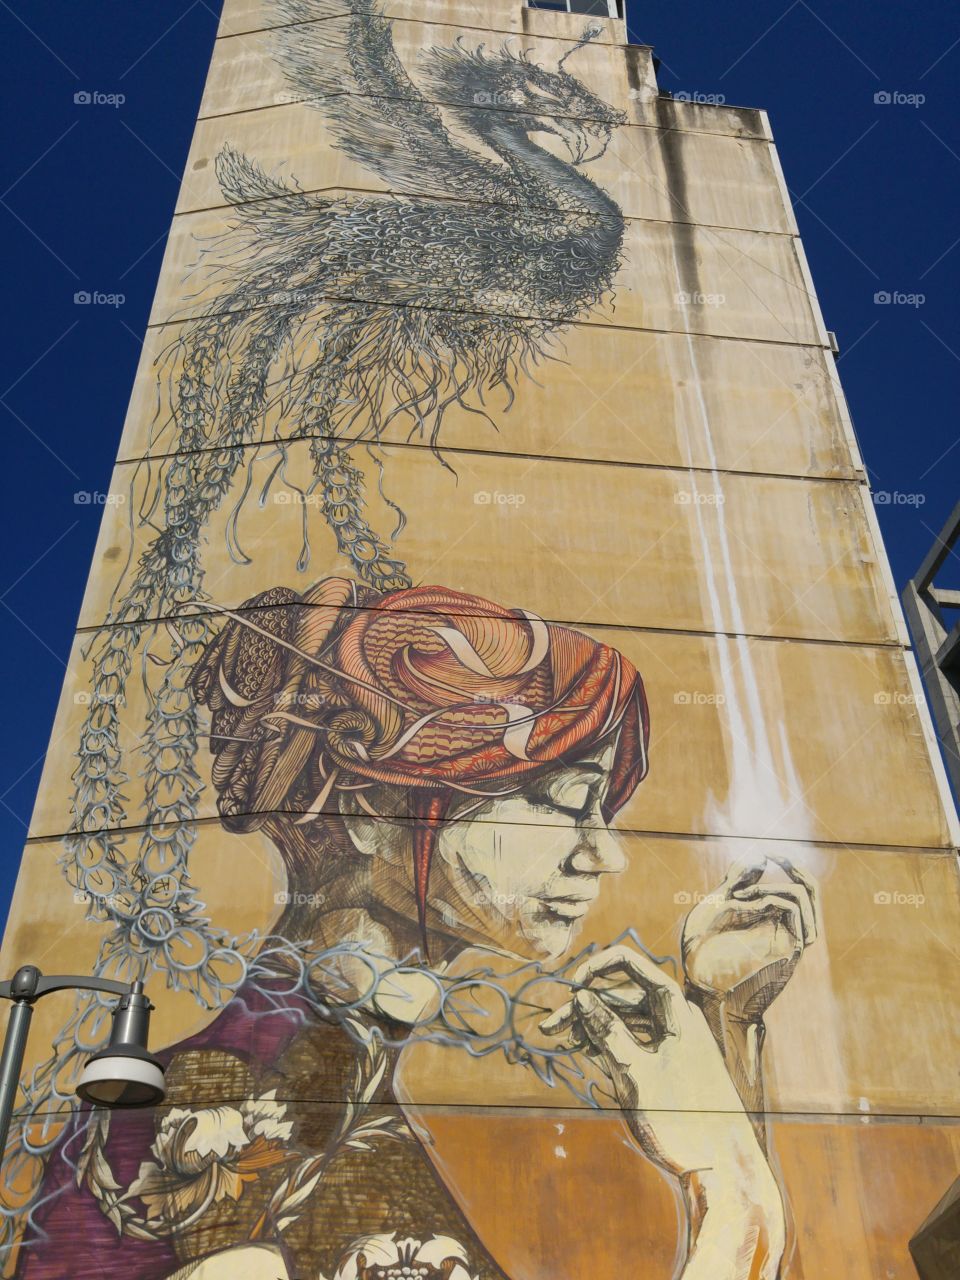 street art on tall building